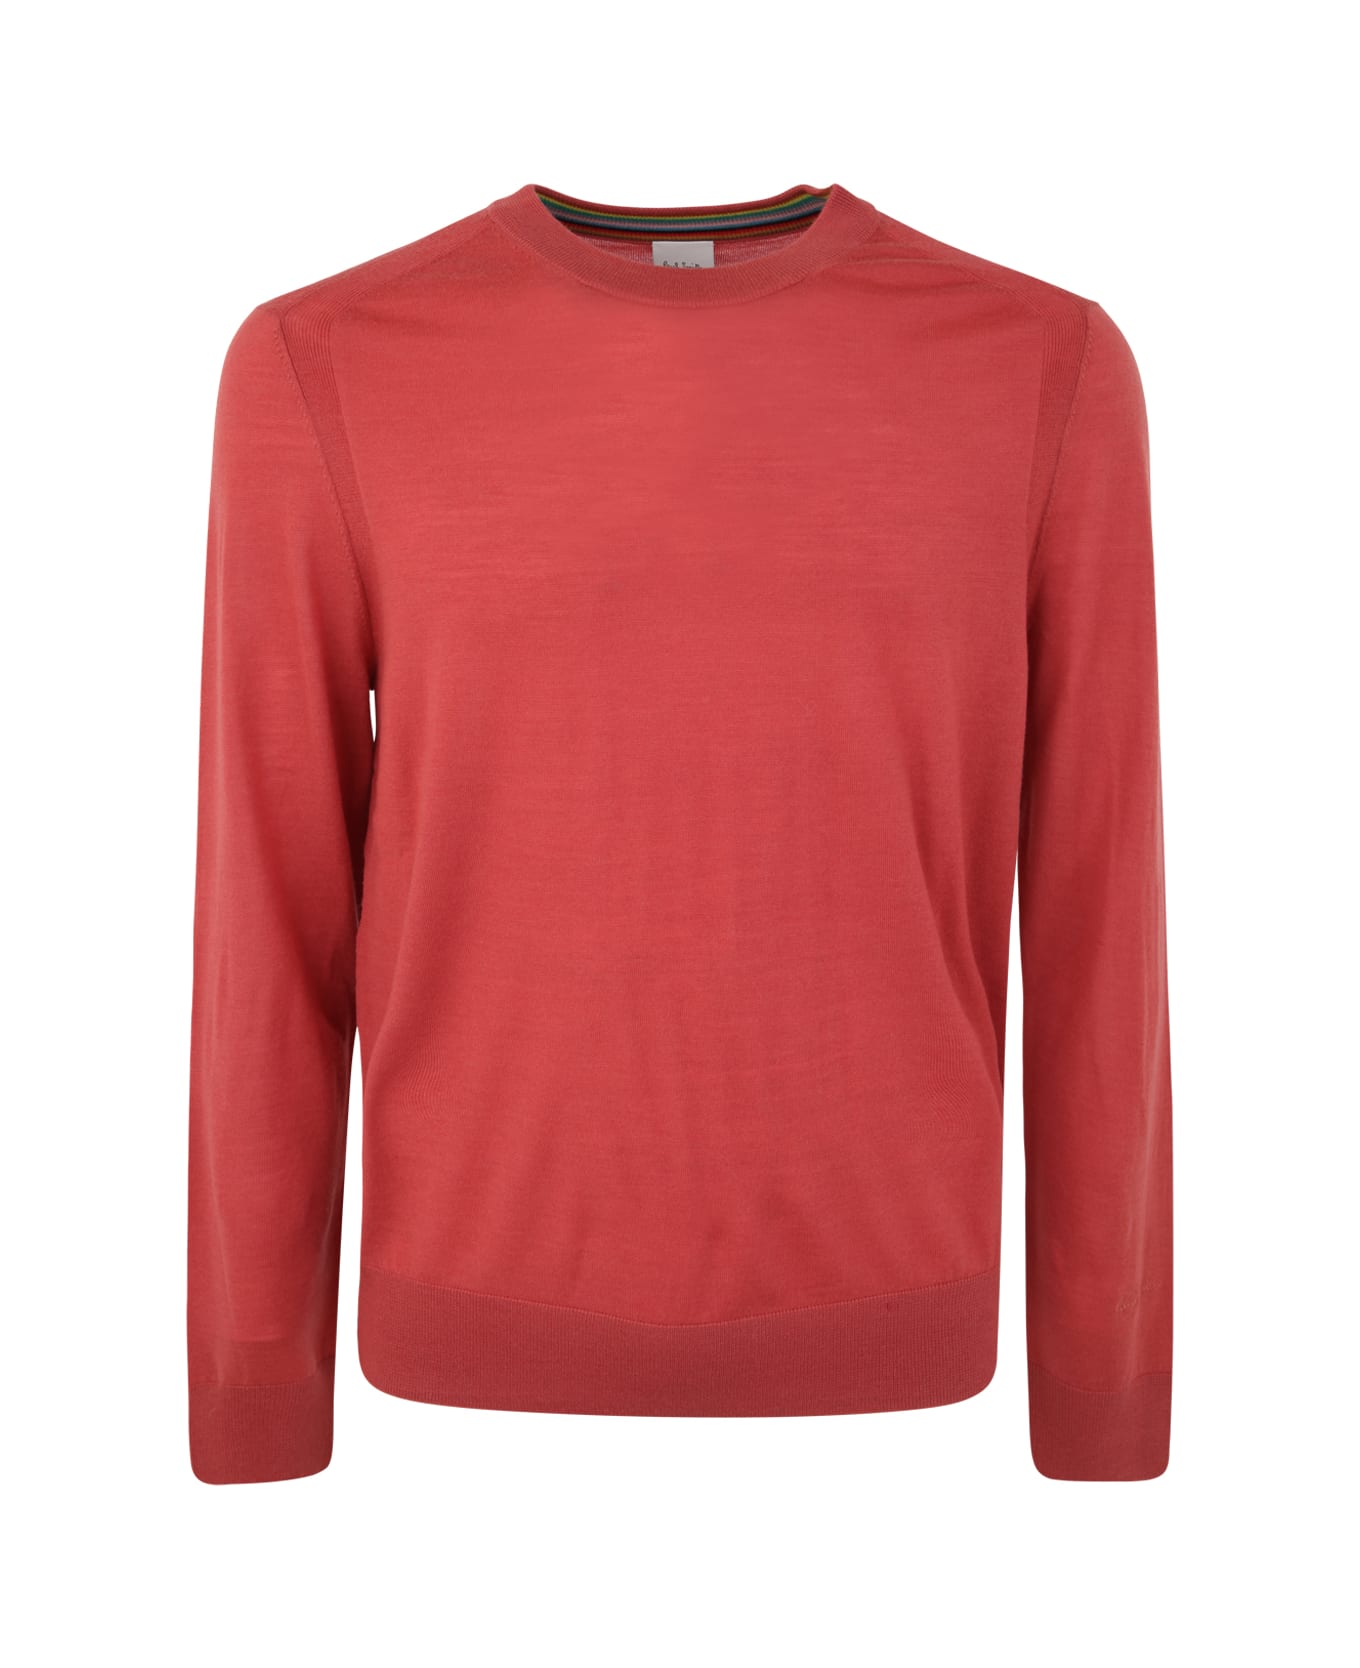 Paul Smith Mens Sweater Crew Neck - Reds